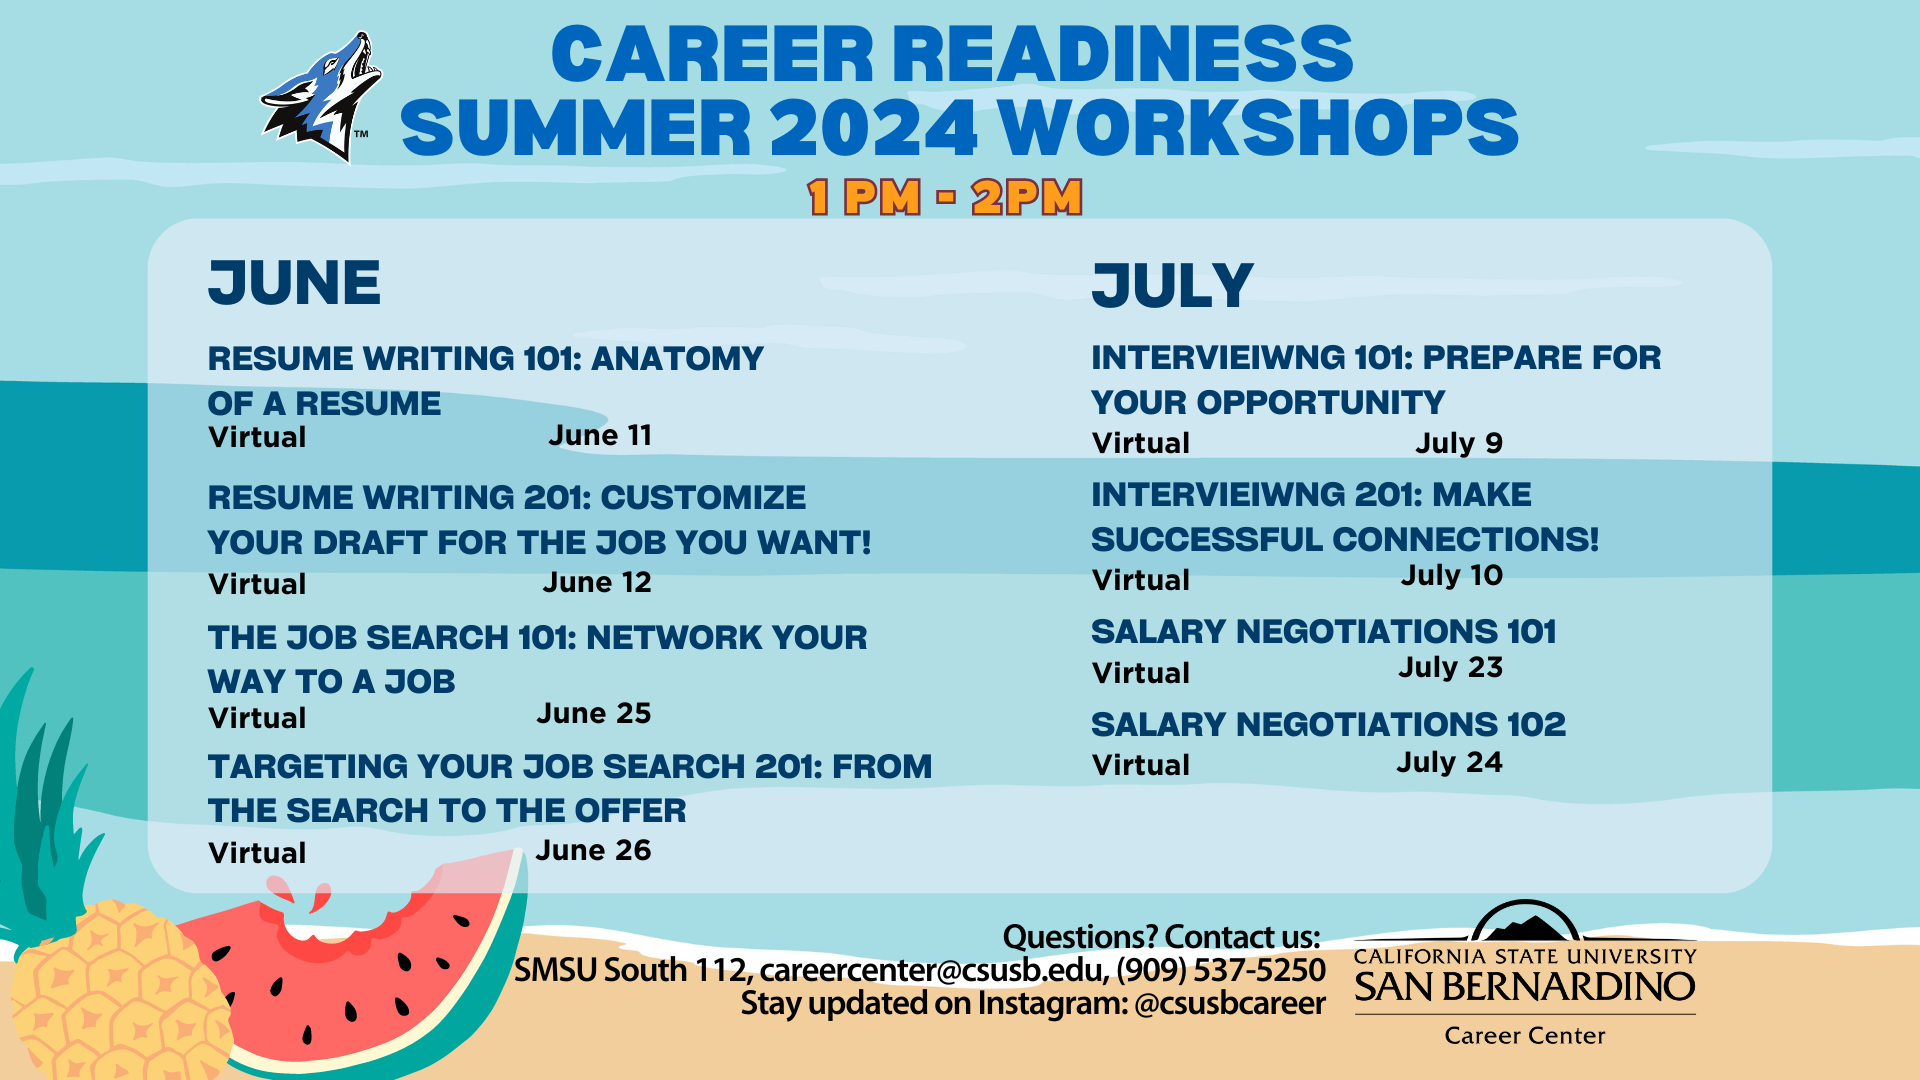 Career Readiness Summer 2024 Workshops